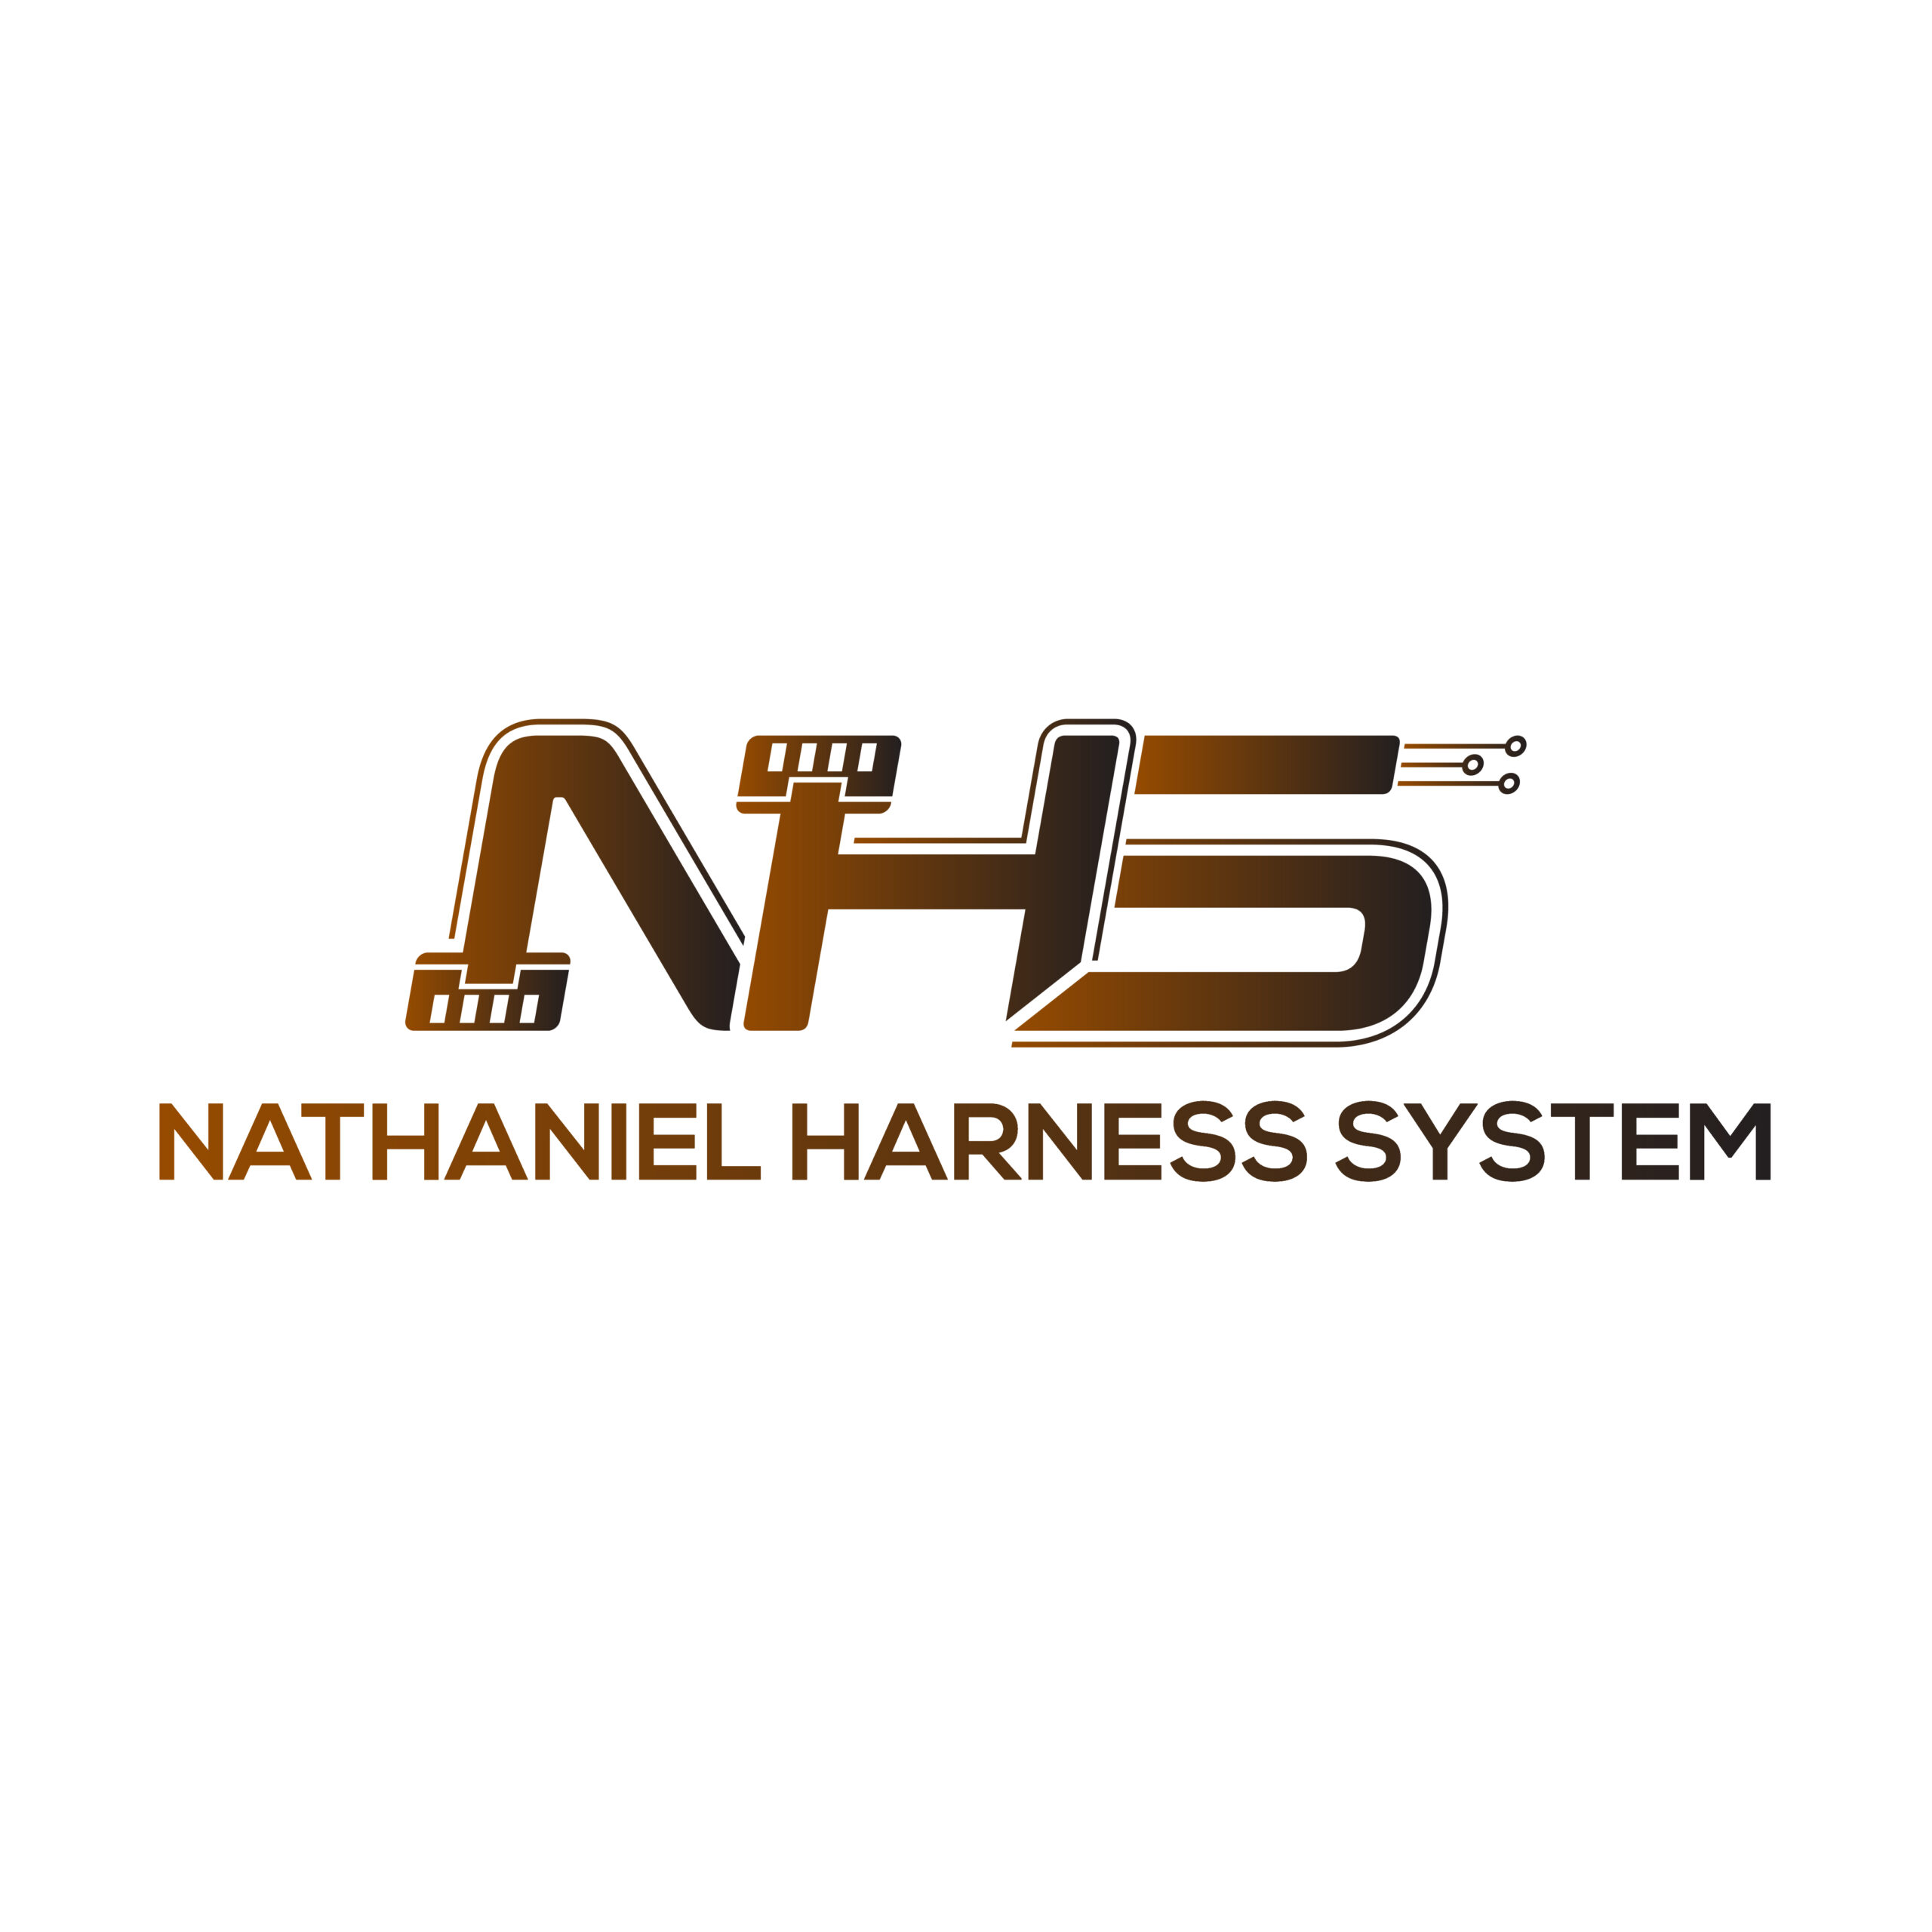 Nathaniel Harness System Pvt Ltd